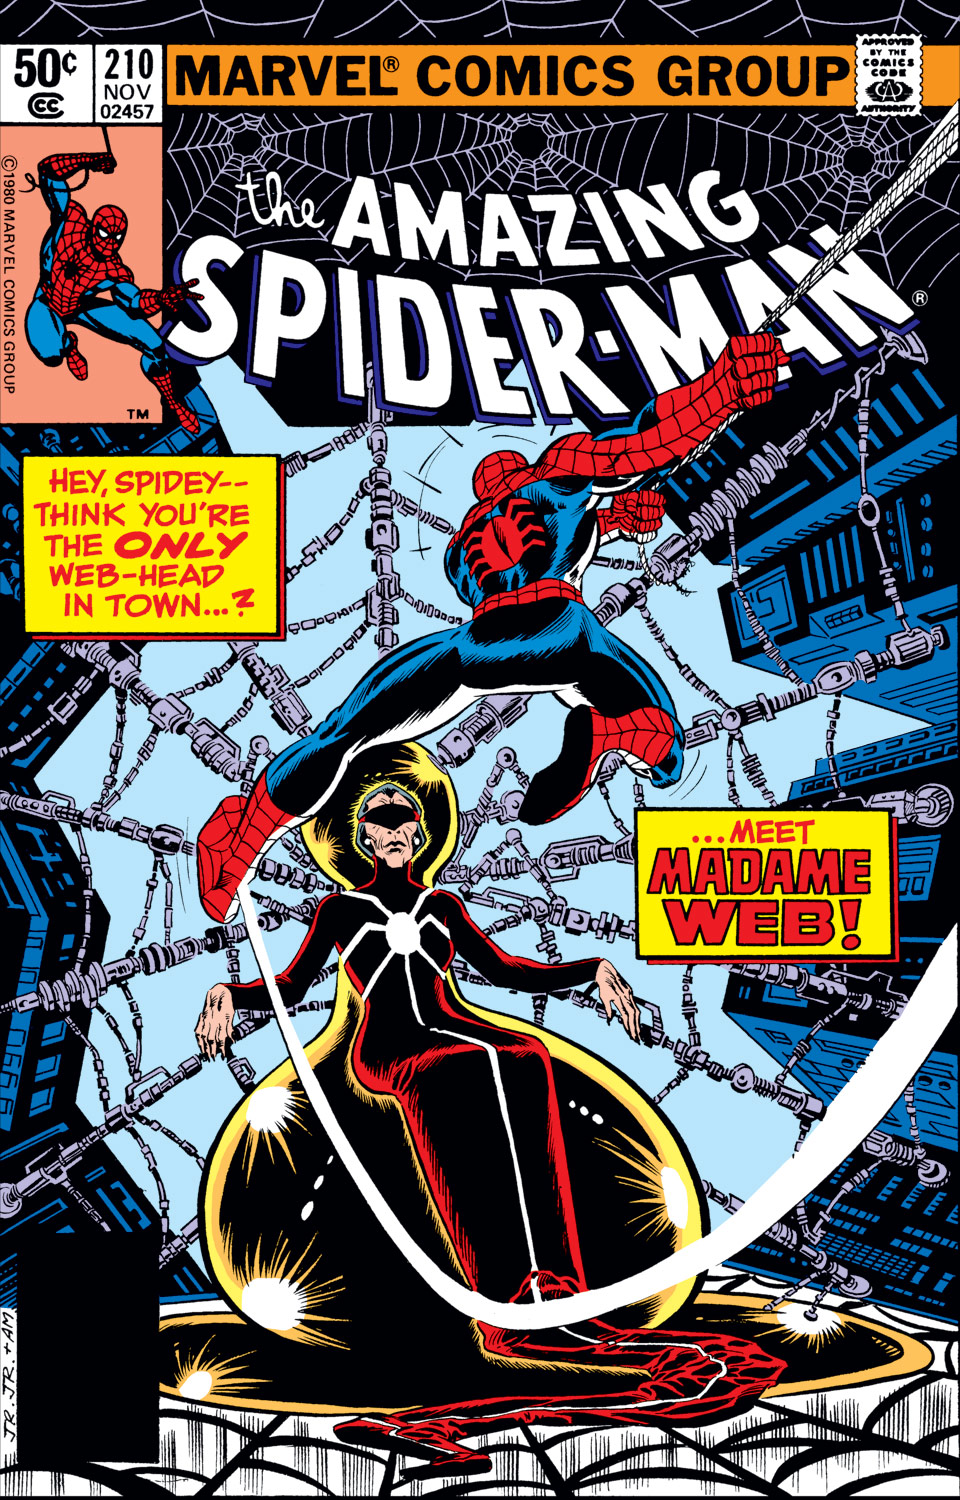 Amazing Spider-Man 210 cover